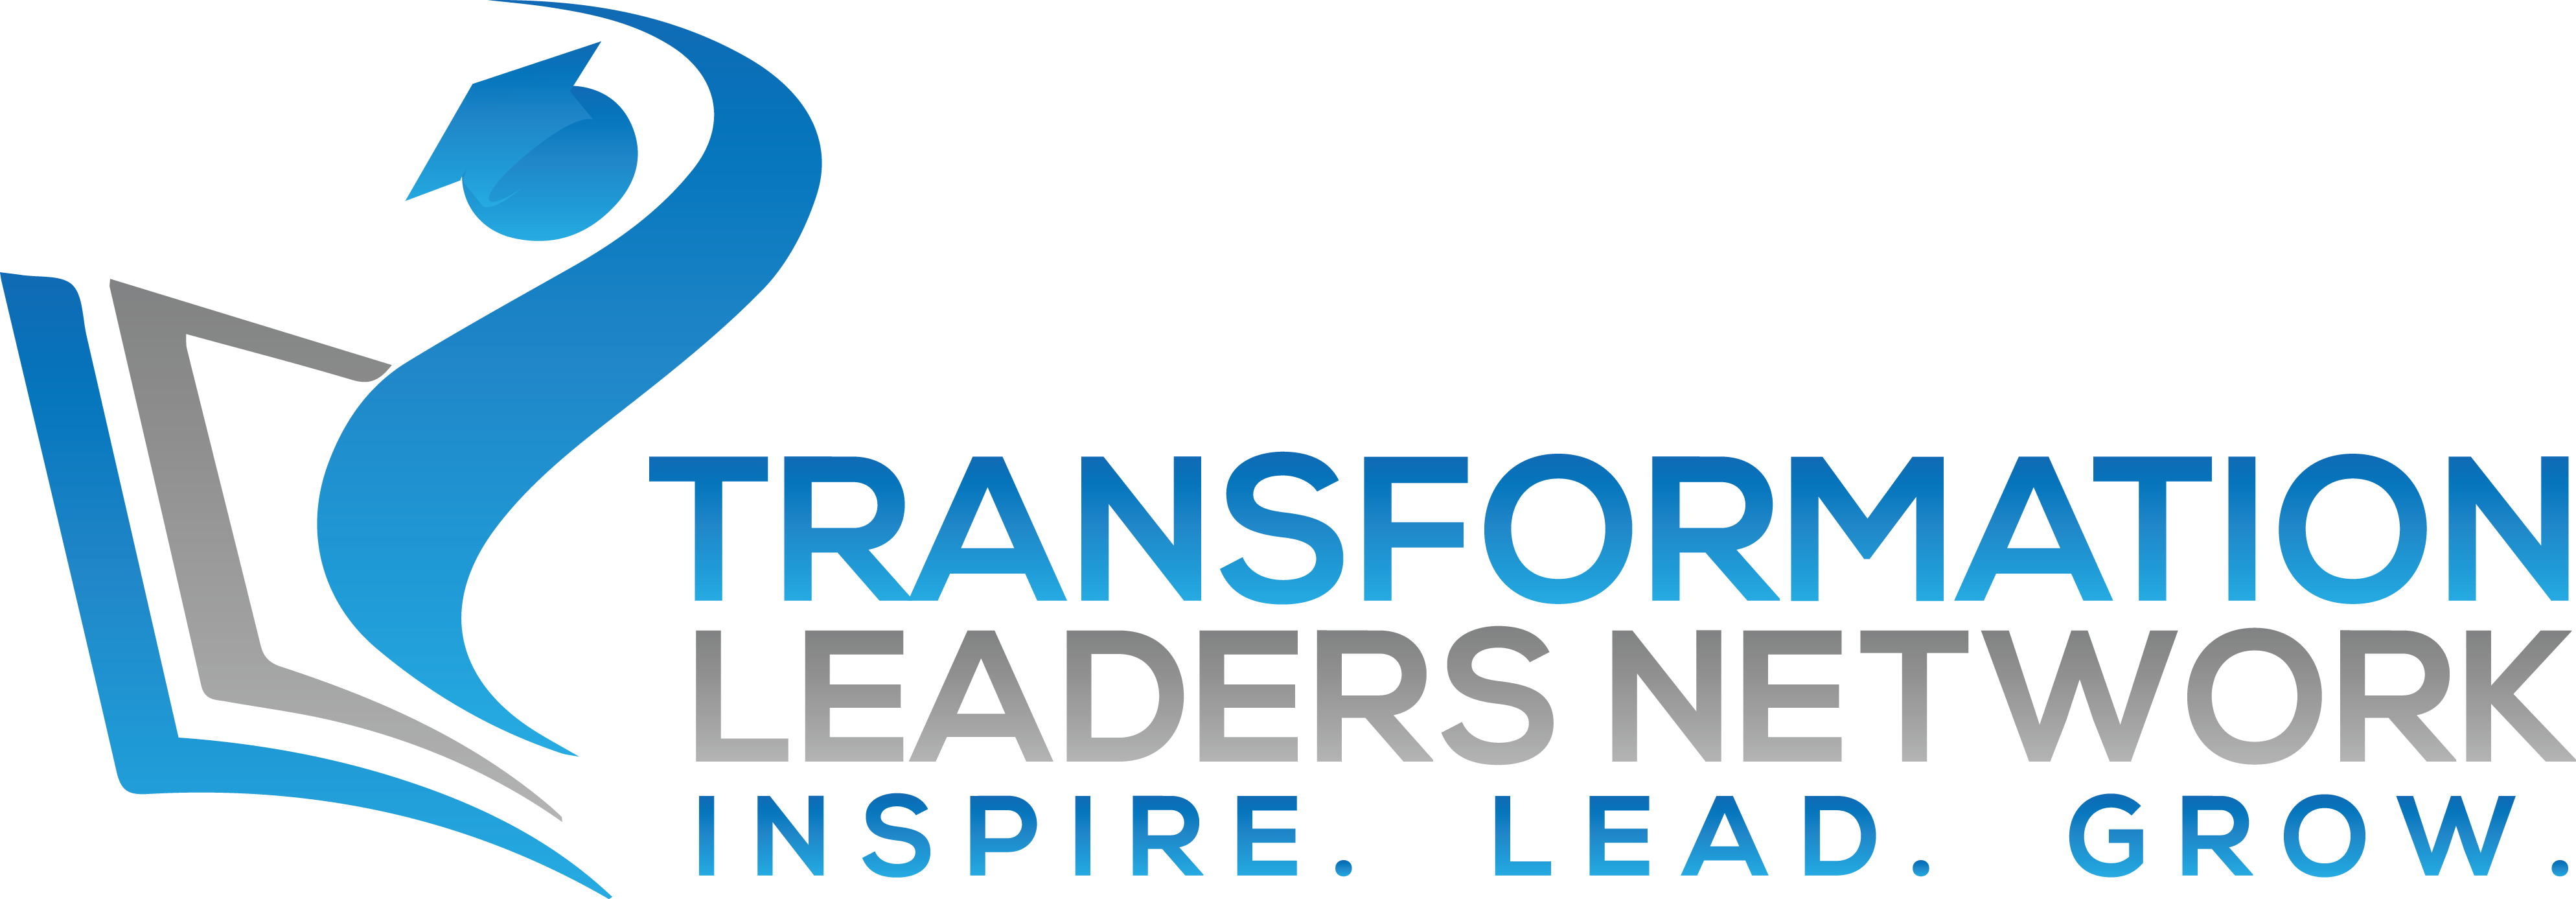 Transformation Leaders Network